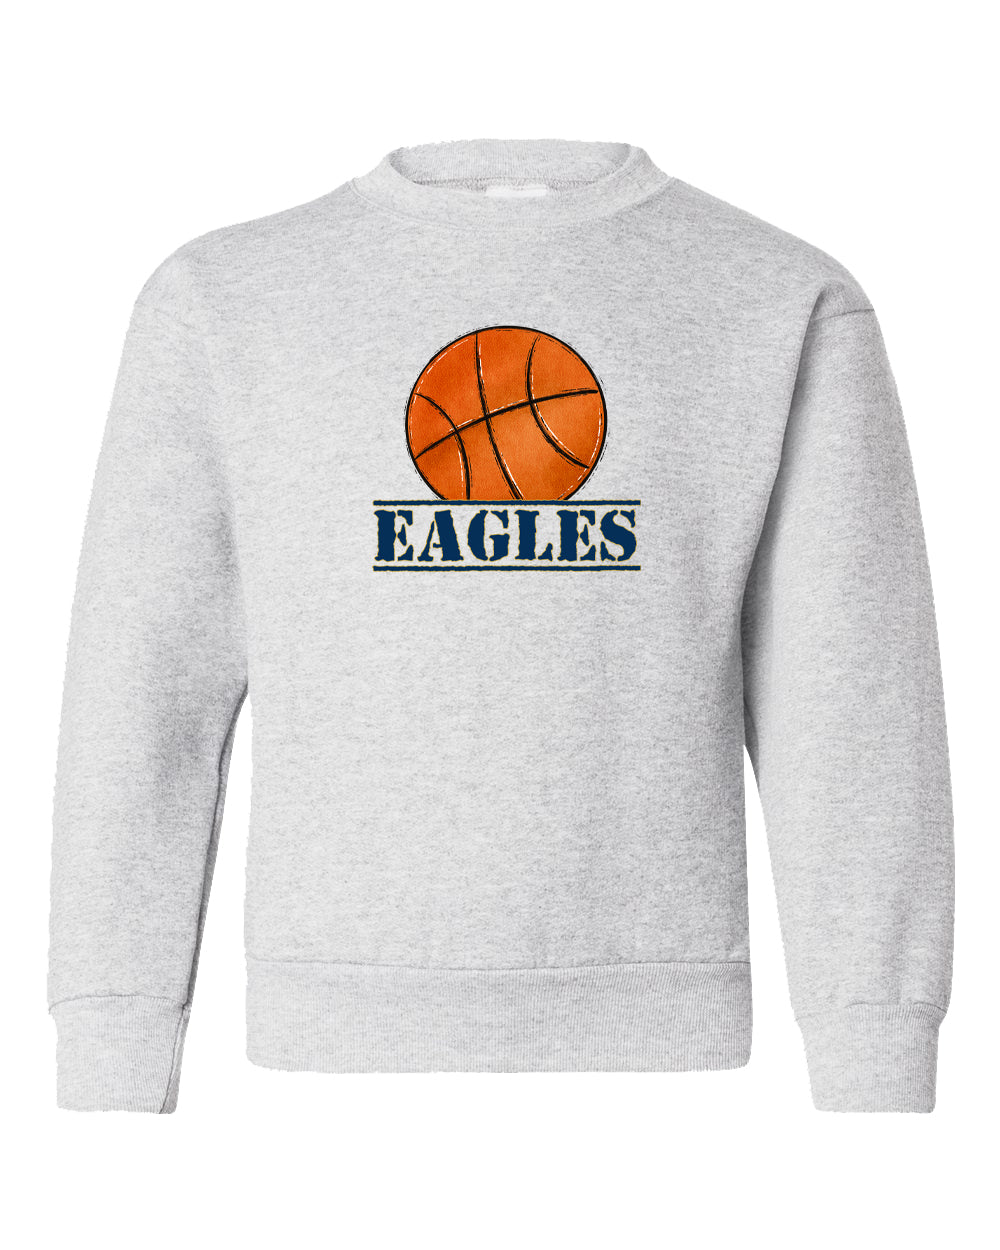 Youth Eagles basketball sweatshirt